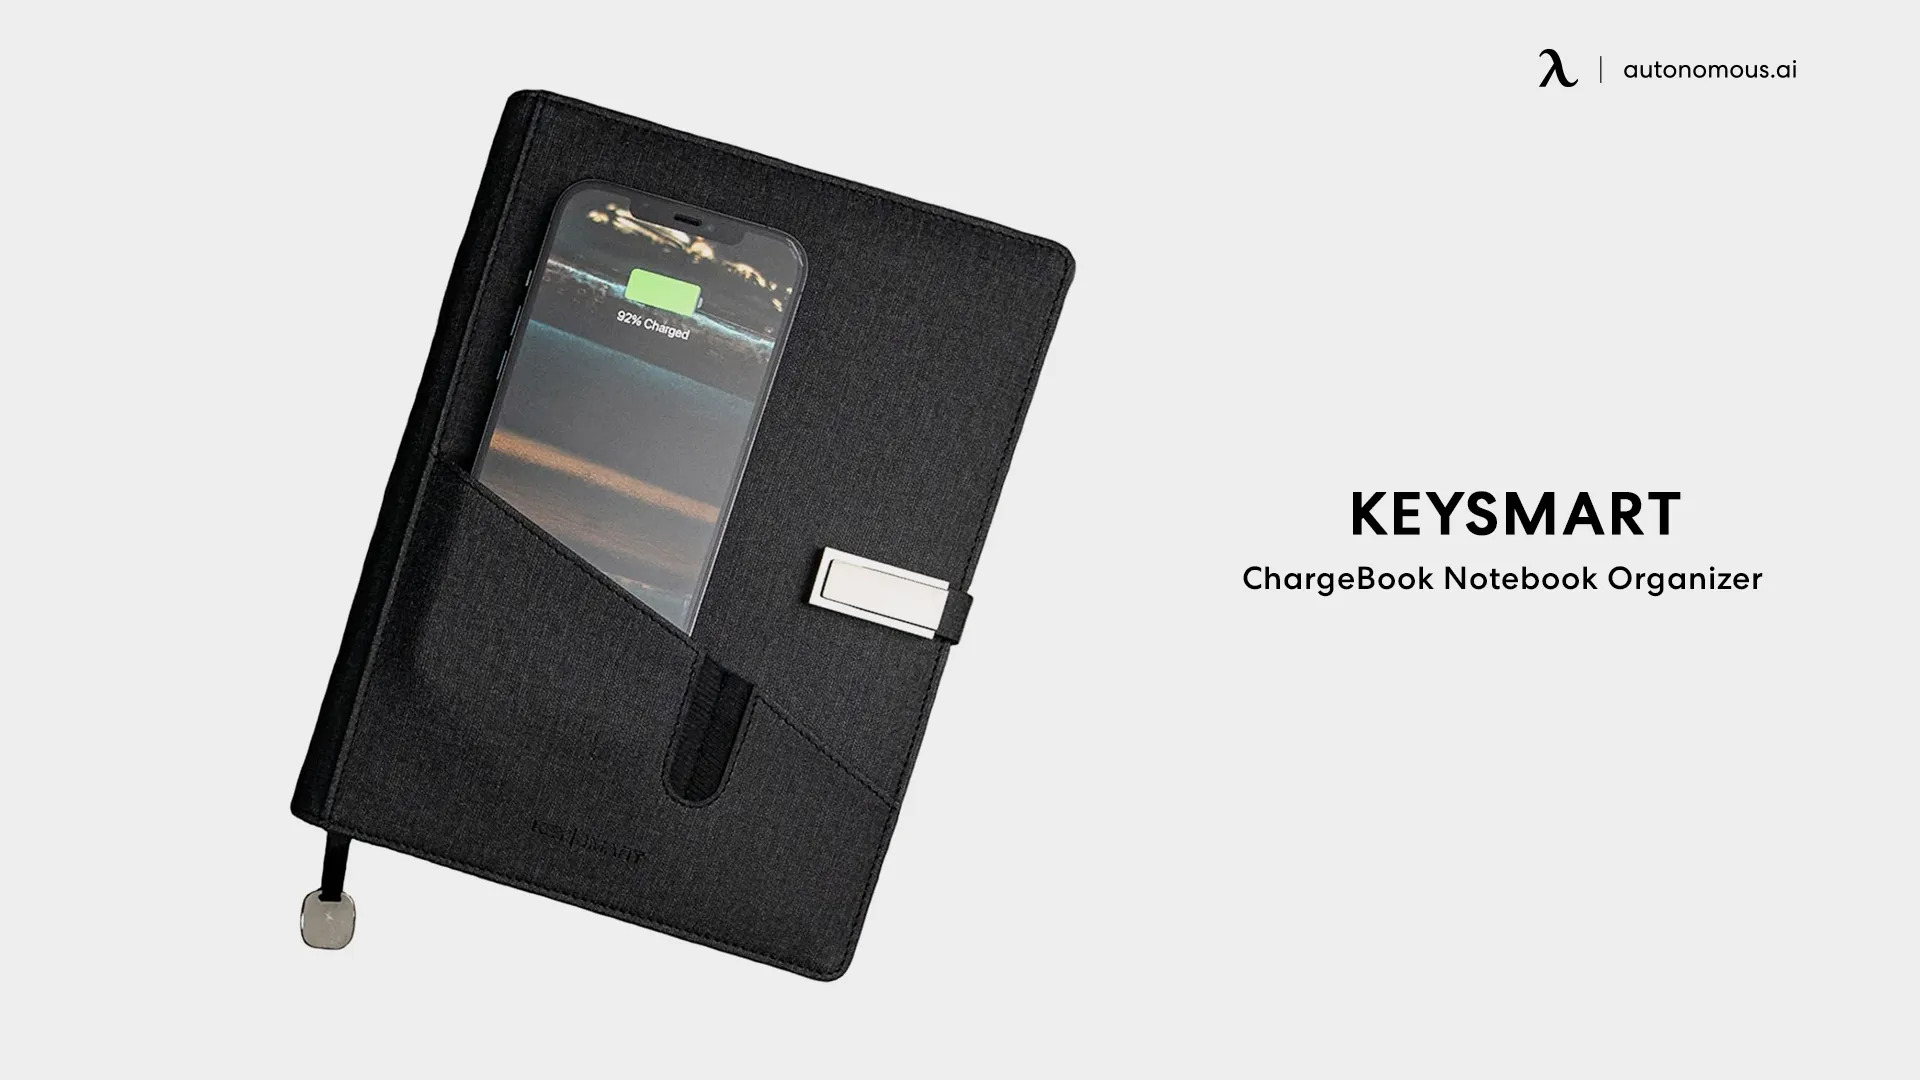 KeySmart ChargeBook Notebook Organizer - Black Friday tech deals